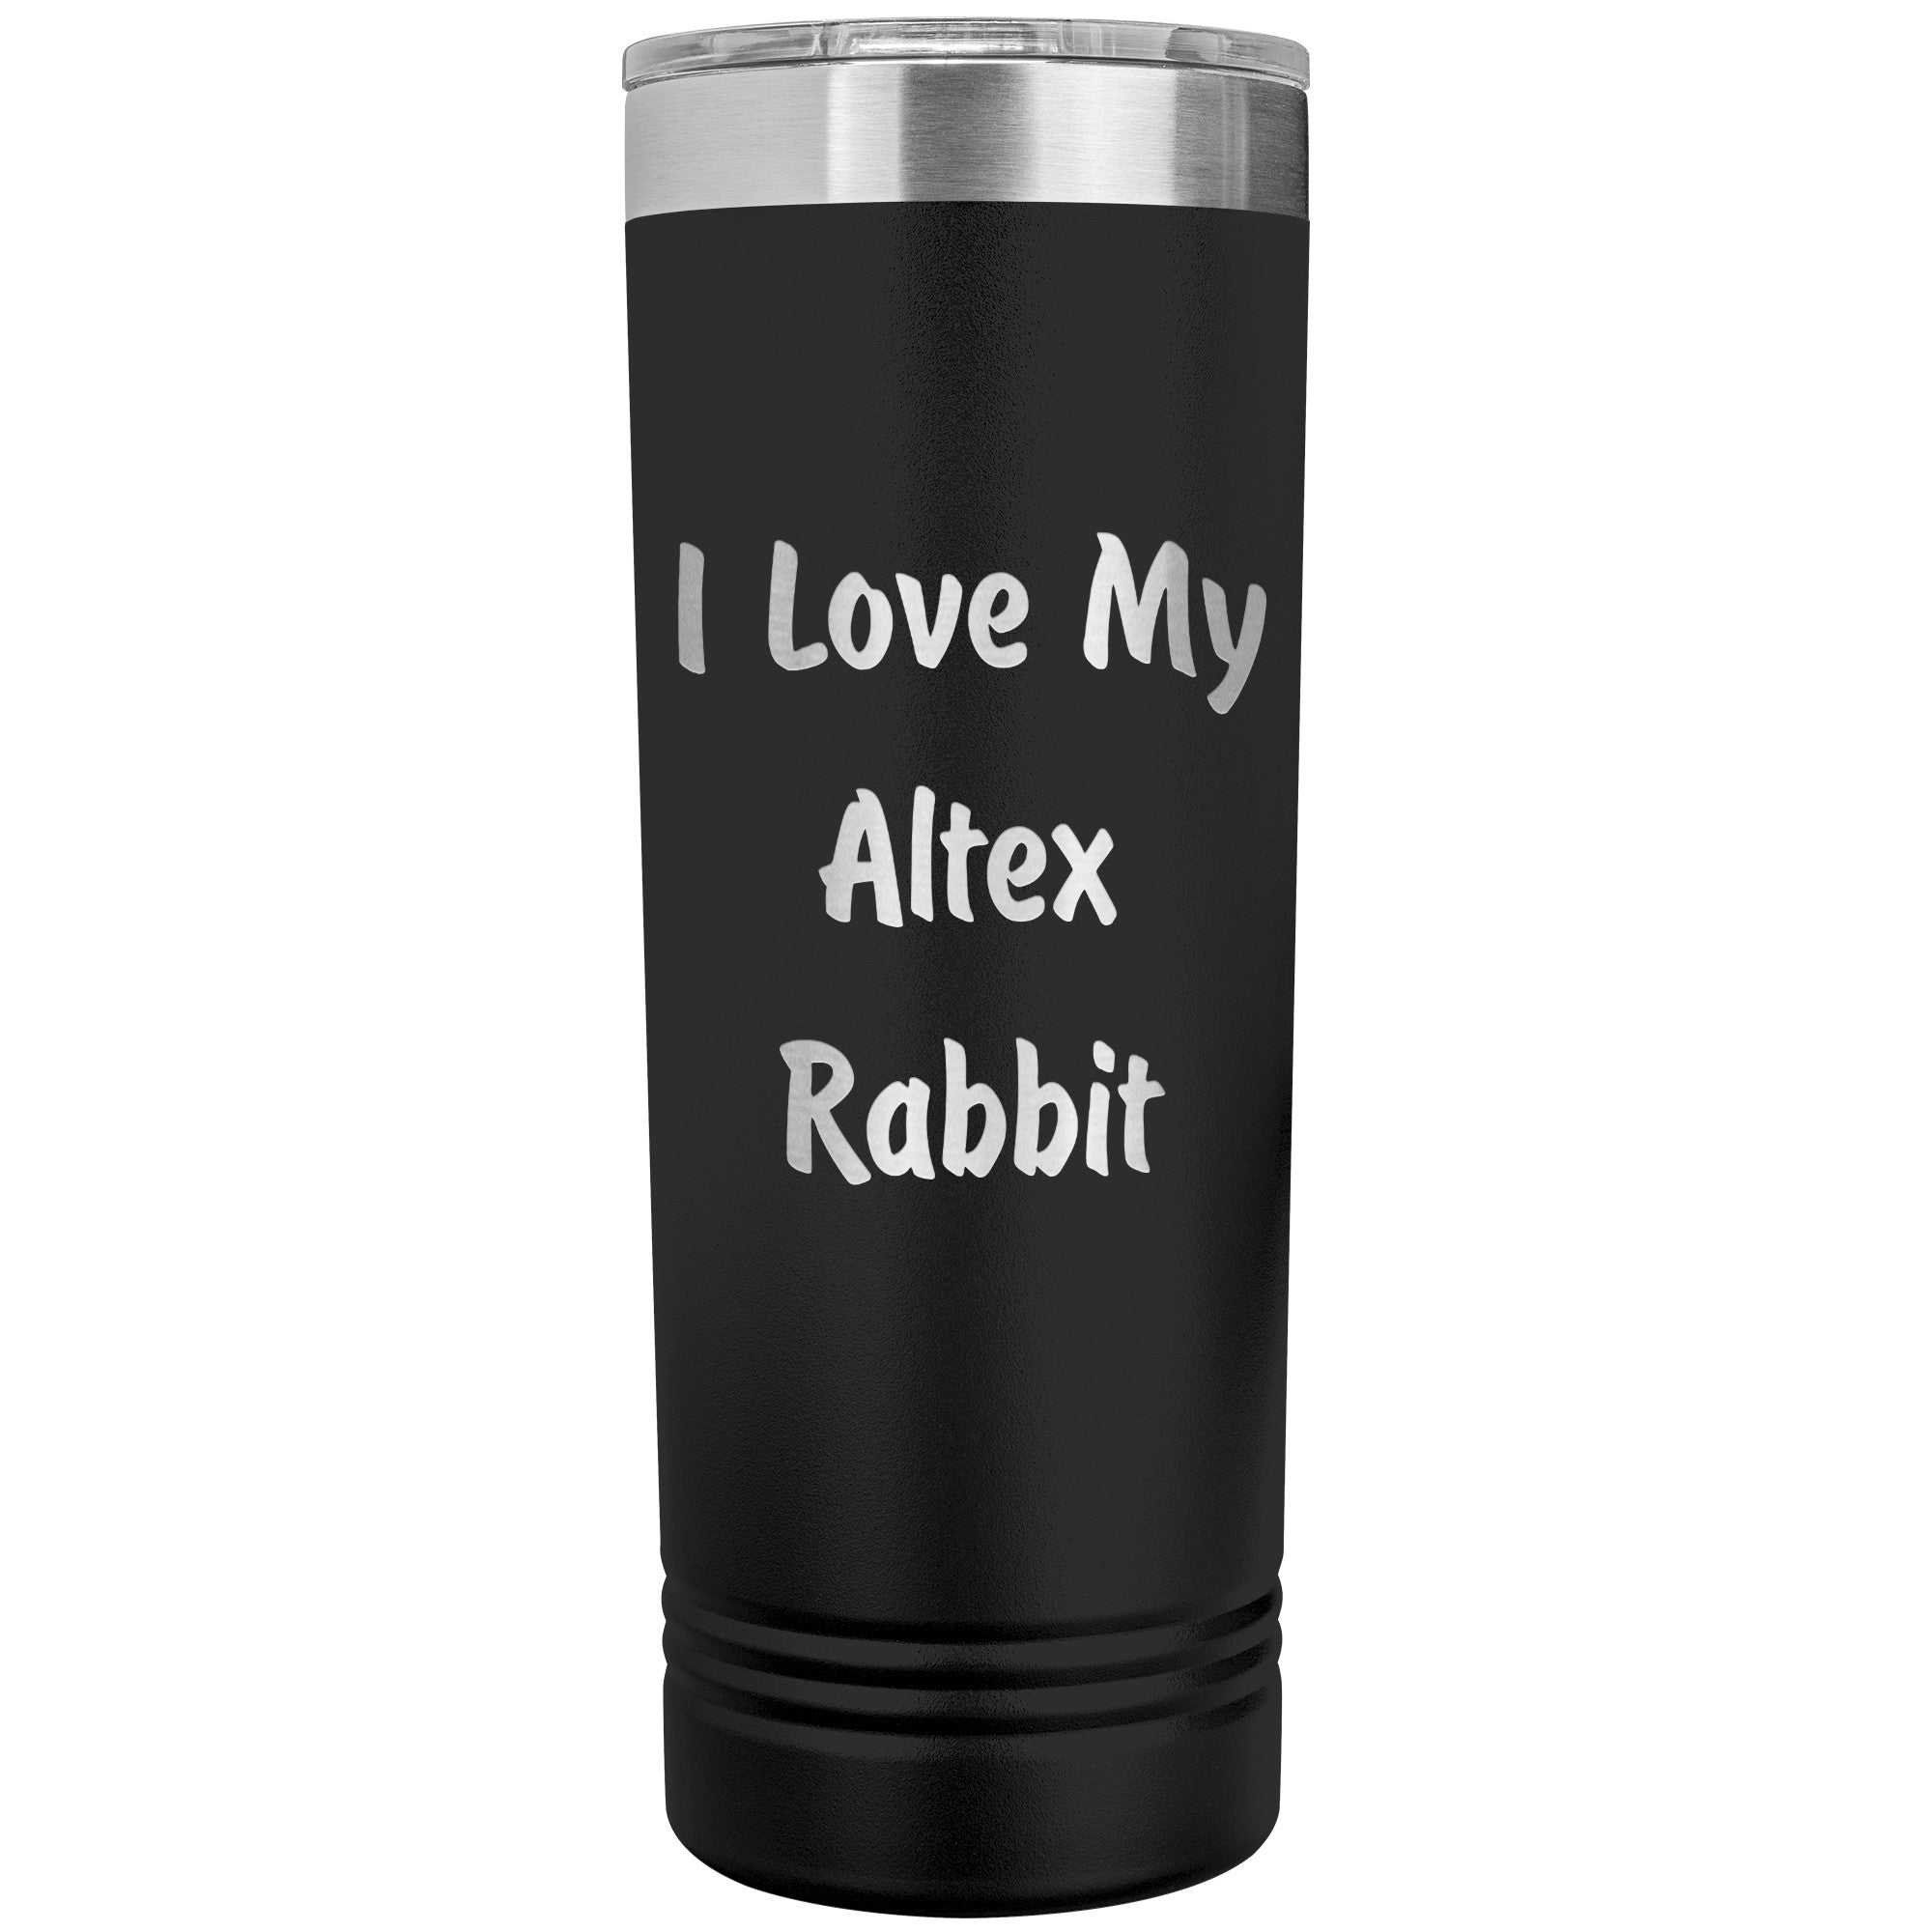 Love My Altex Rabbit - 22oz Insulated Skinny Tumbler